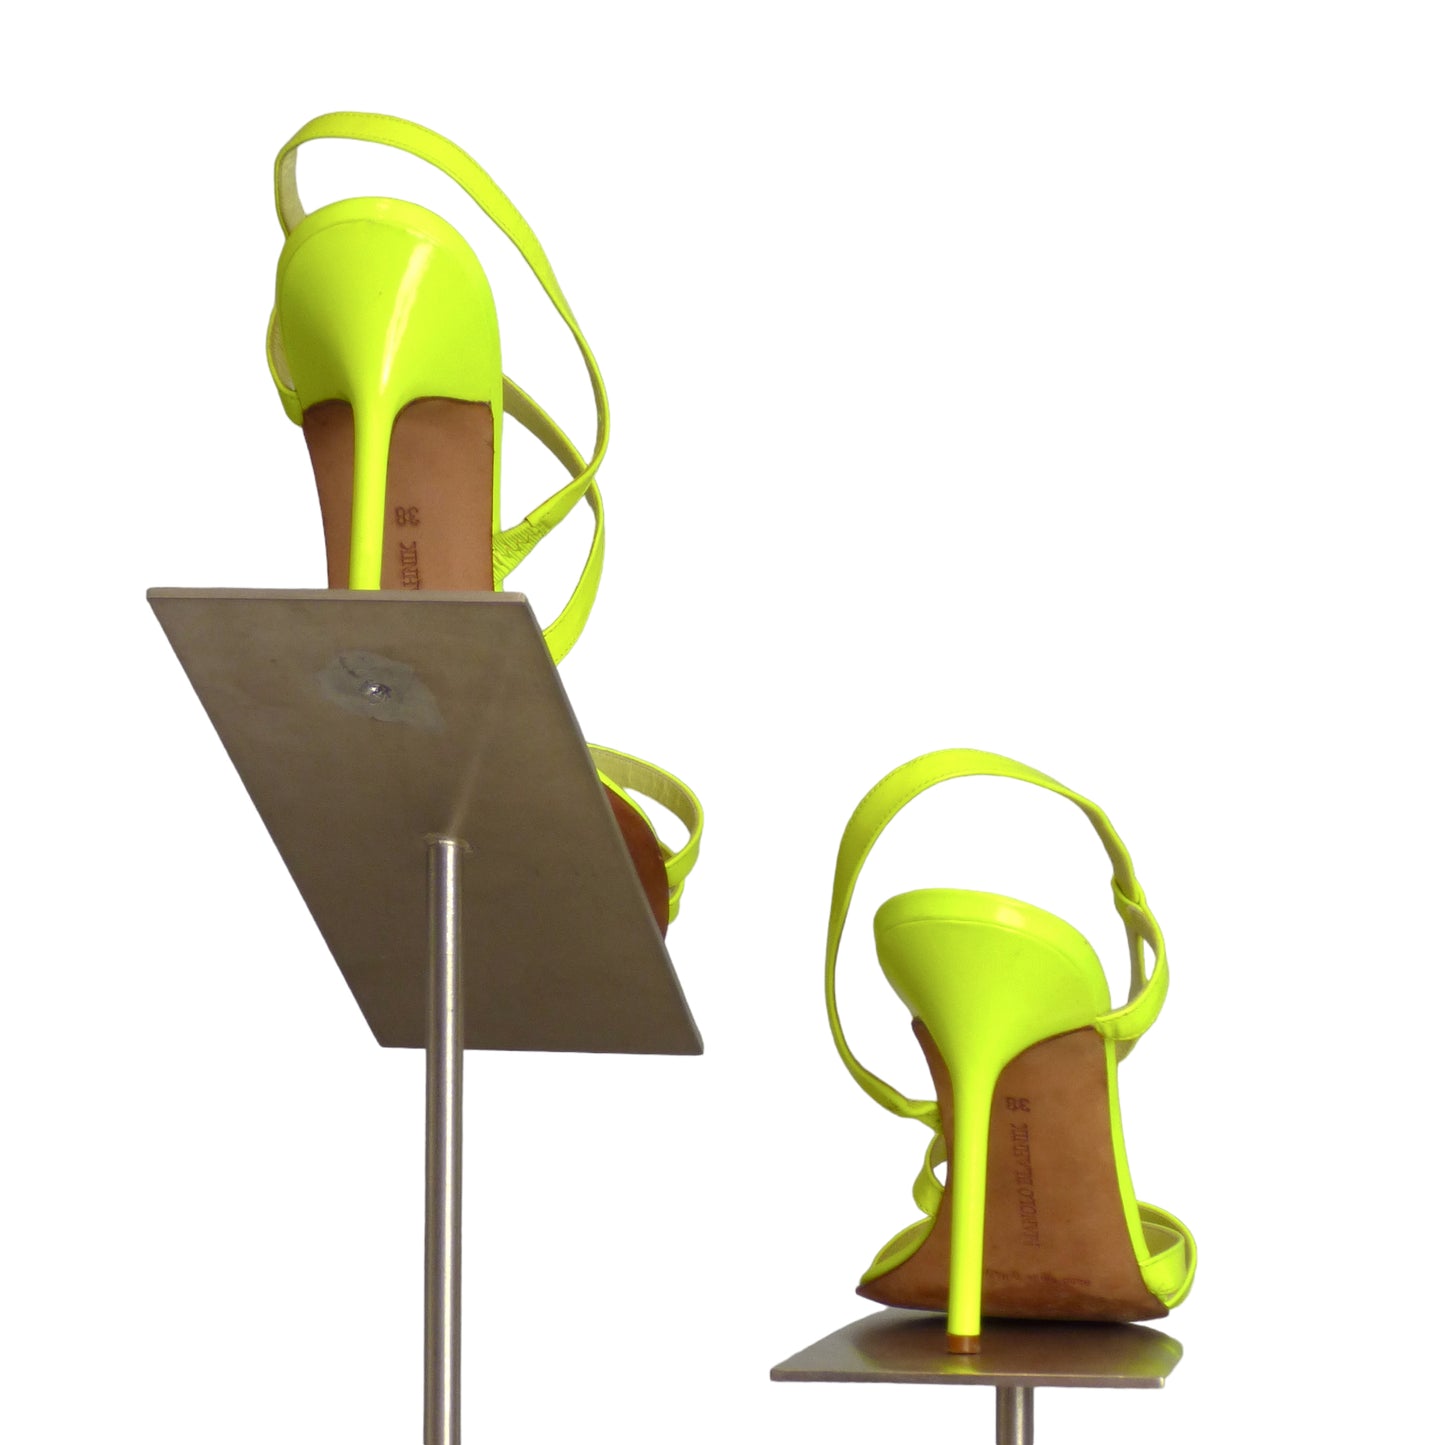 MANOLO BLAHNIK- Florescent Yellow Strappy Sandals Size-38